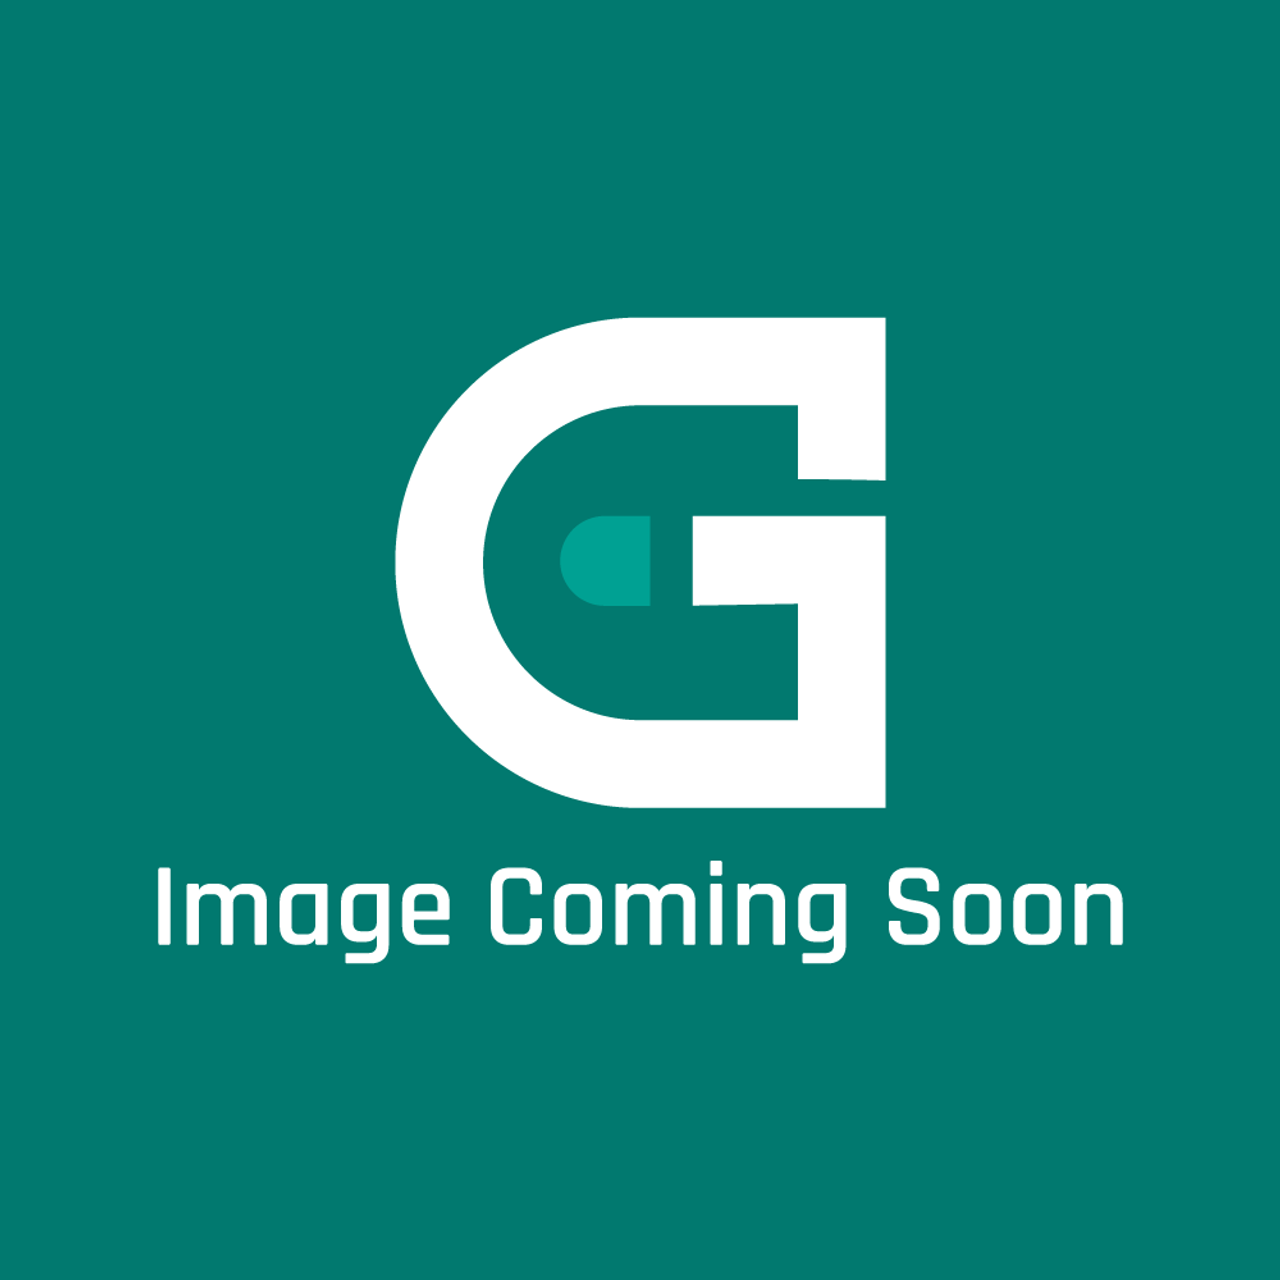 Garland 4527936 - Base 24, Match Cg - Image Coming Soon!